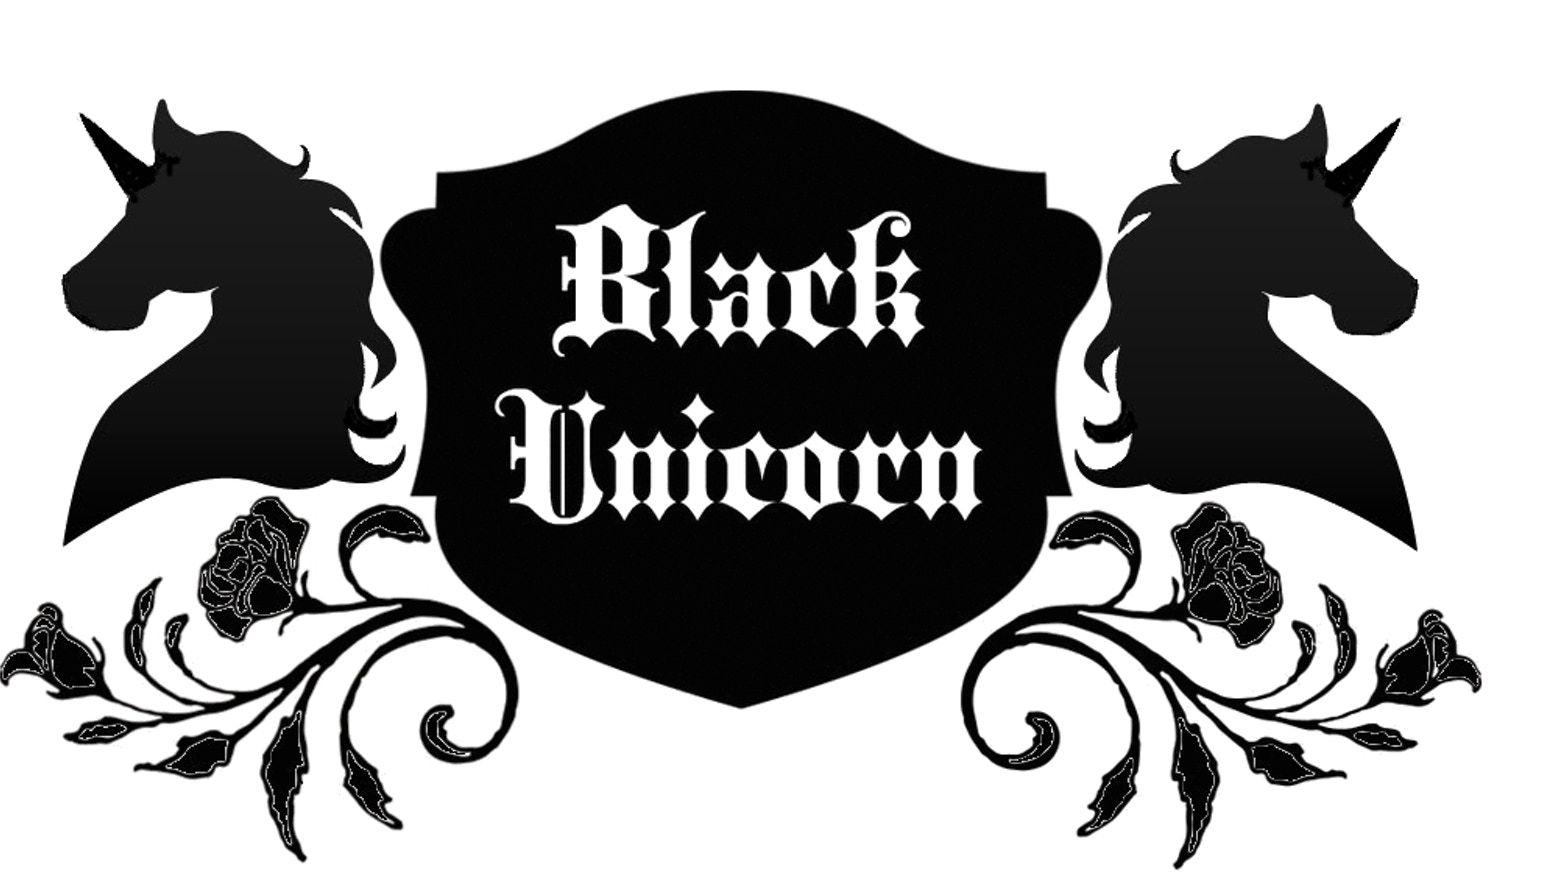 Unicorn Black and White Logo - Black Unicorn Alternative Subscription Box by Mary Jane Morgan